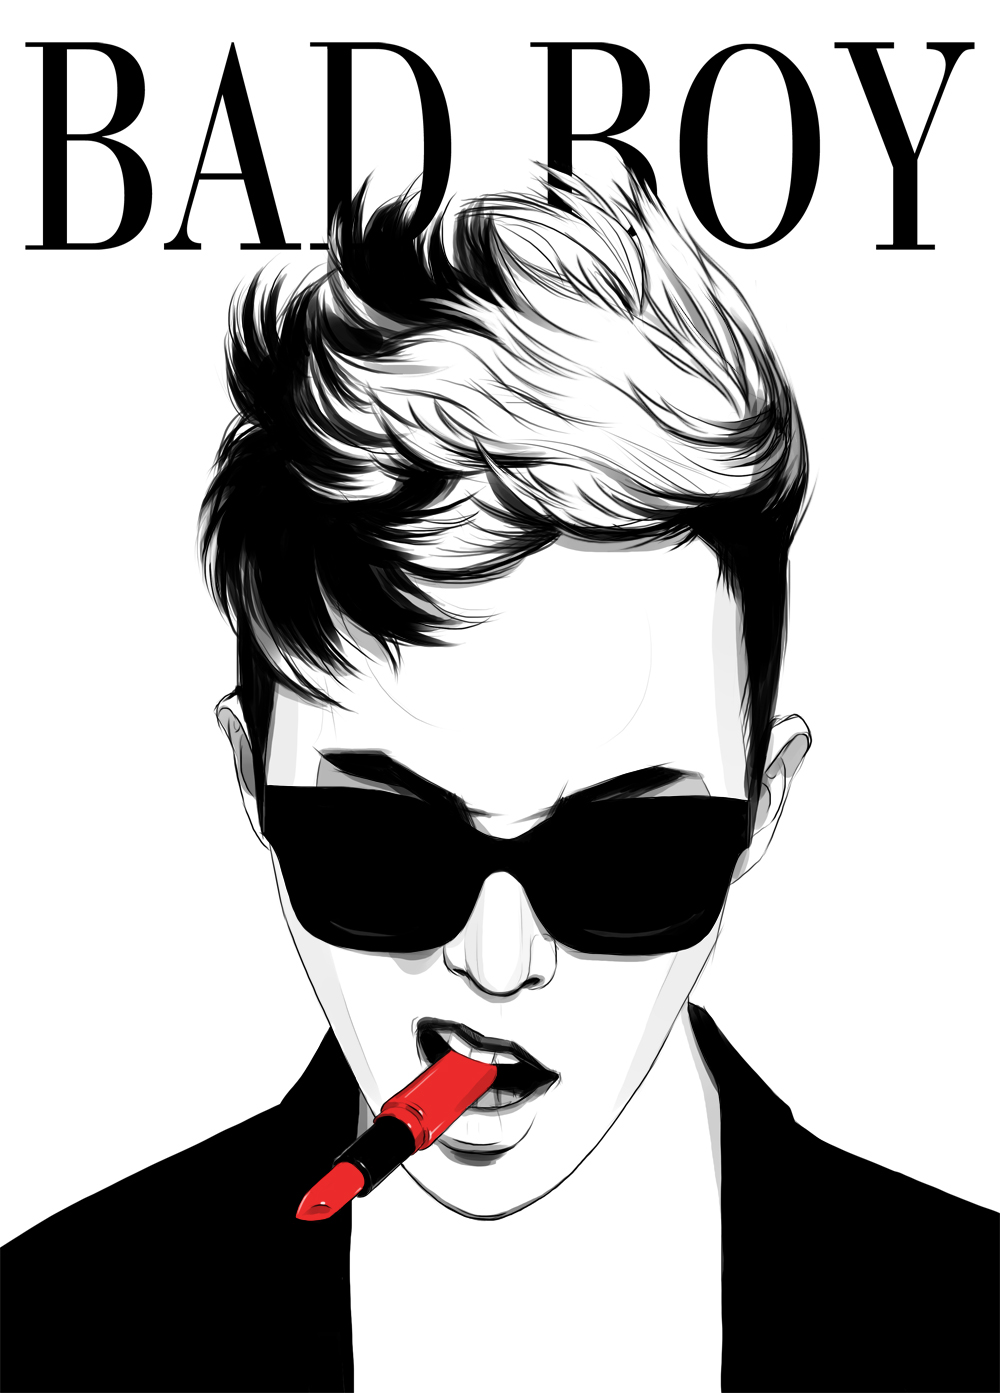 Bad Boy Image Download - 757x1055 Wallpaper 